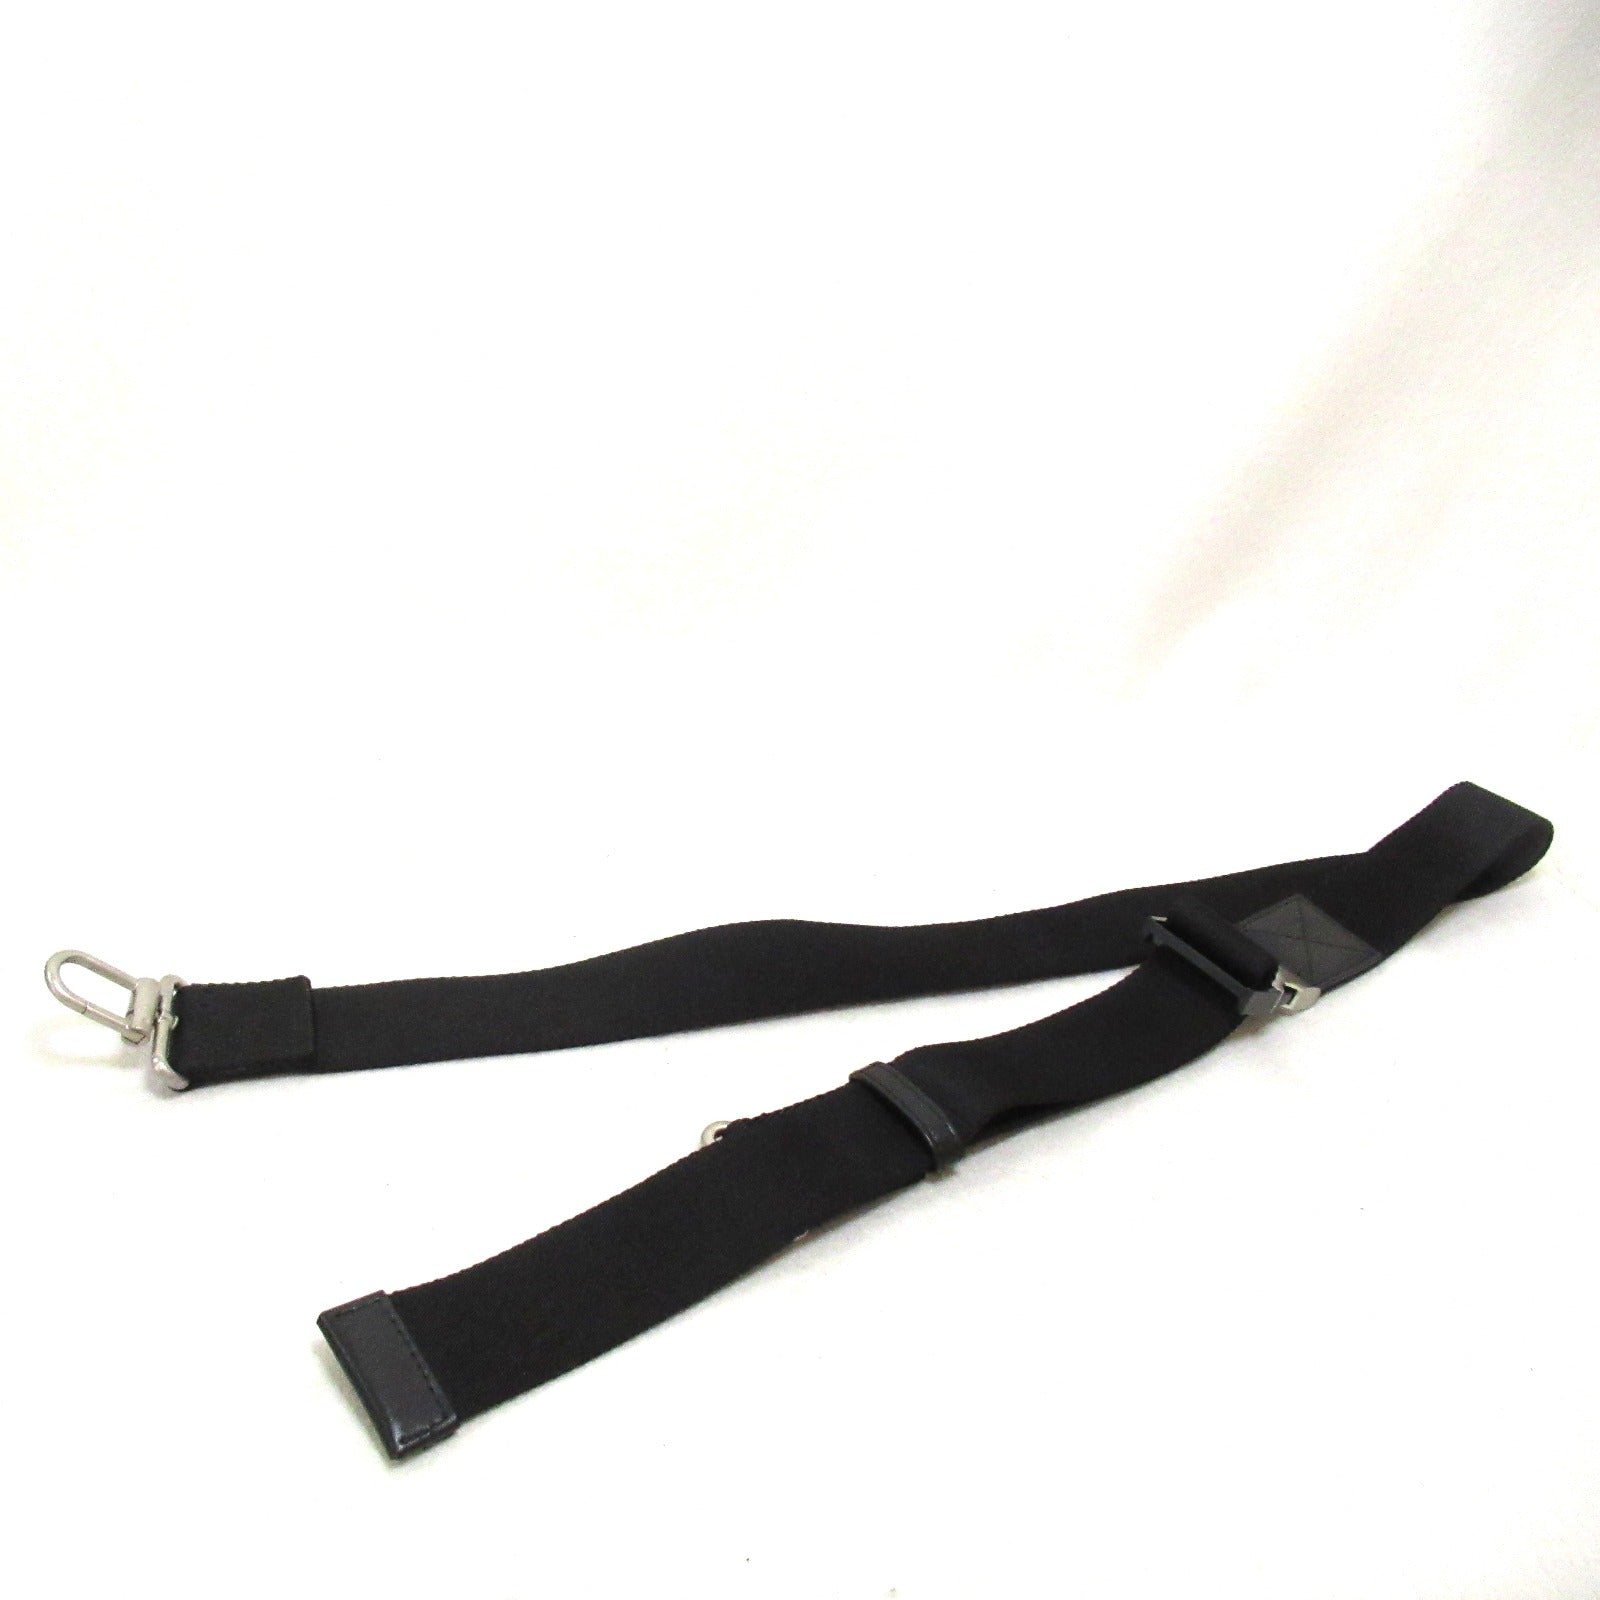 Off-White Off-White Shoulder Bag Bag Nylon  Black OMNQ070F23FAB0011000